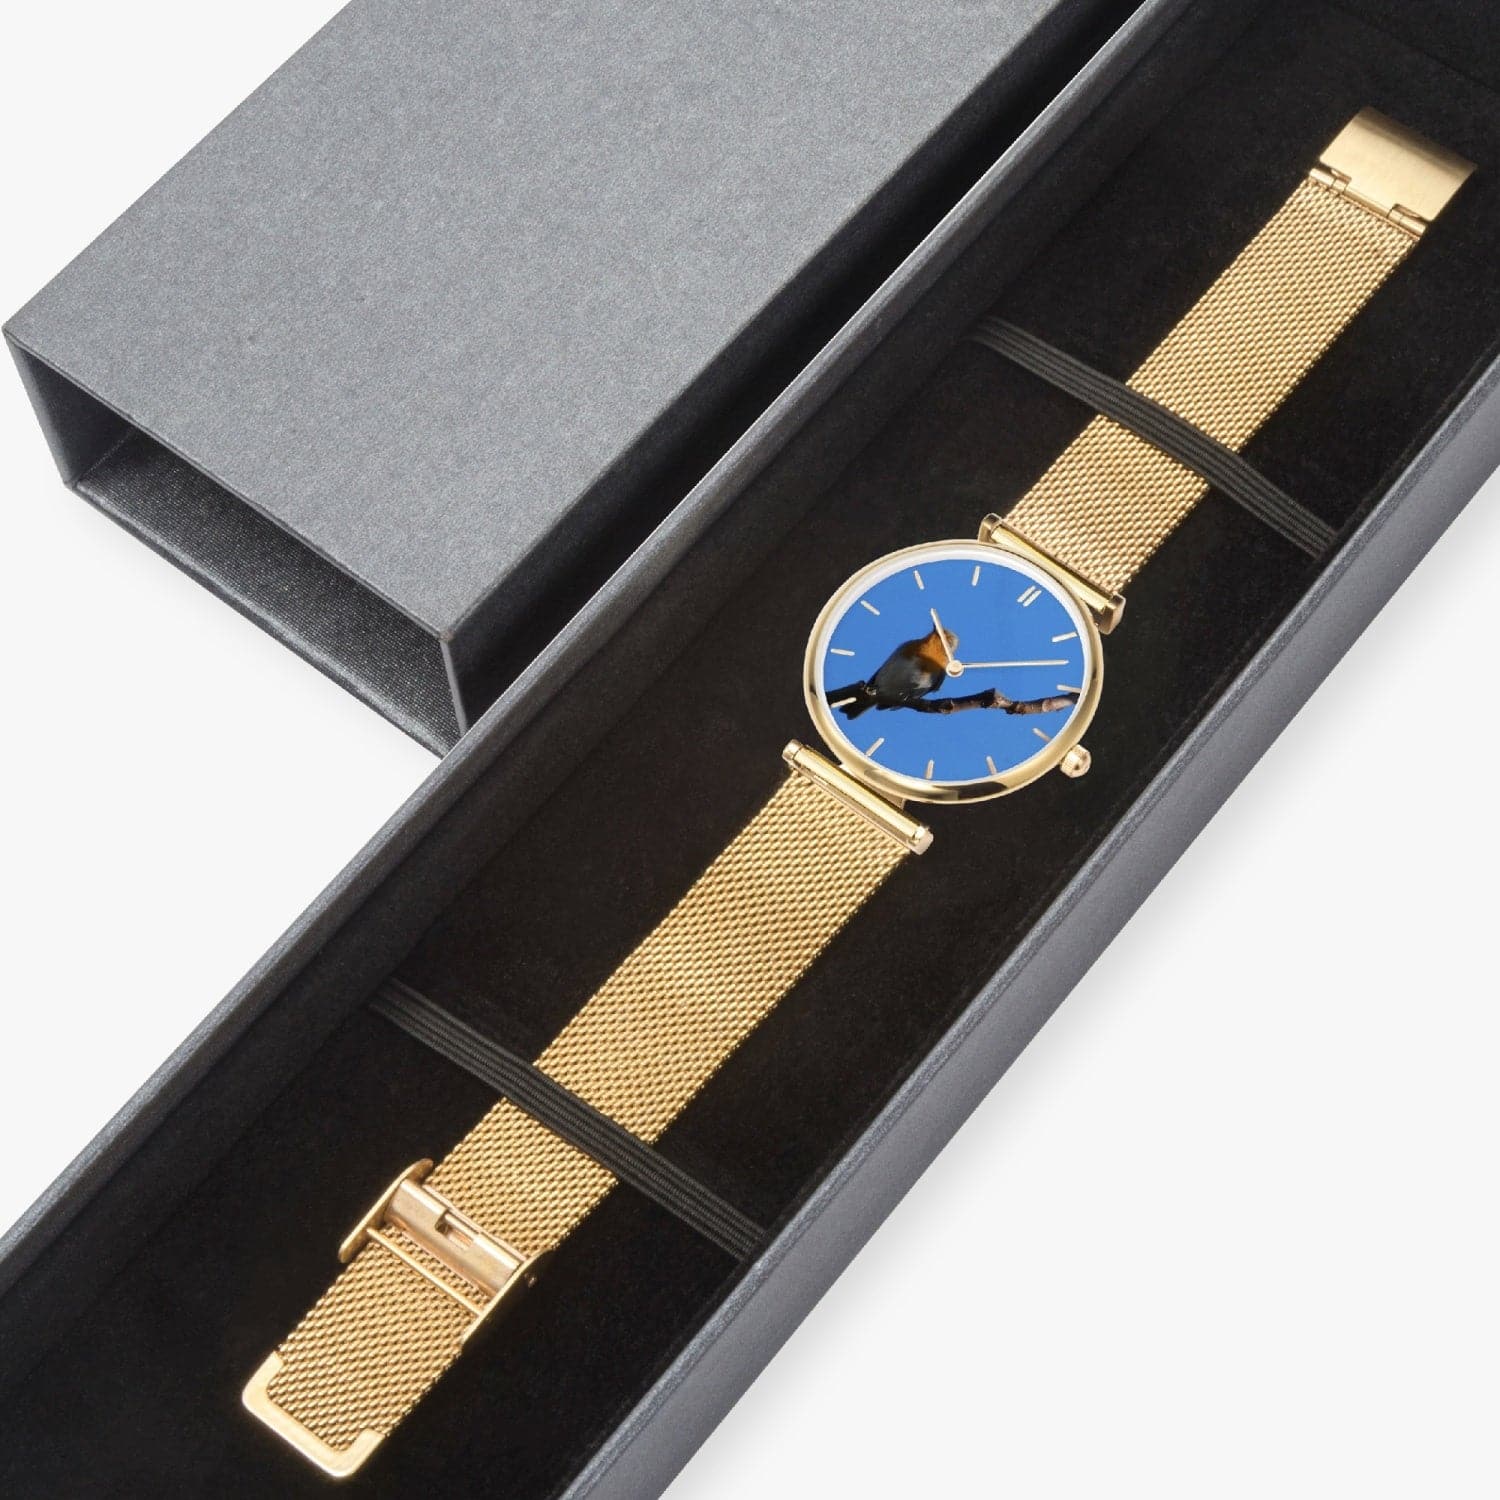 A Robin. New Stylish Ultra-Thin Quartz Watch. Designer watch by Sensus Studio Design